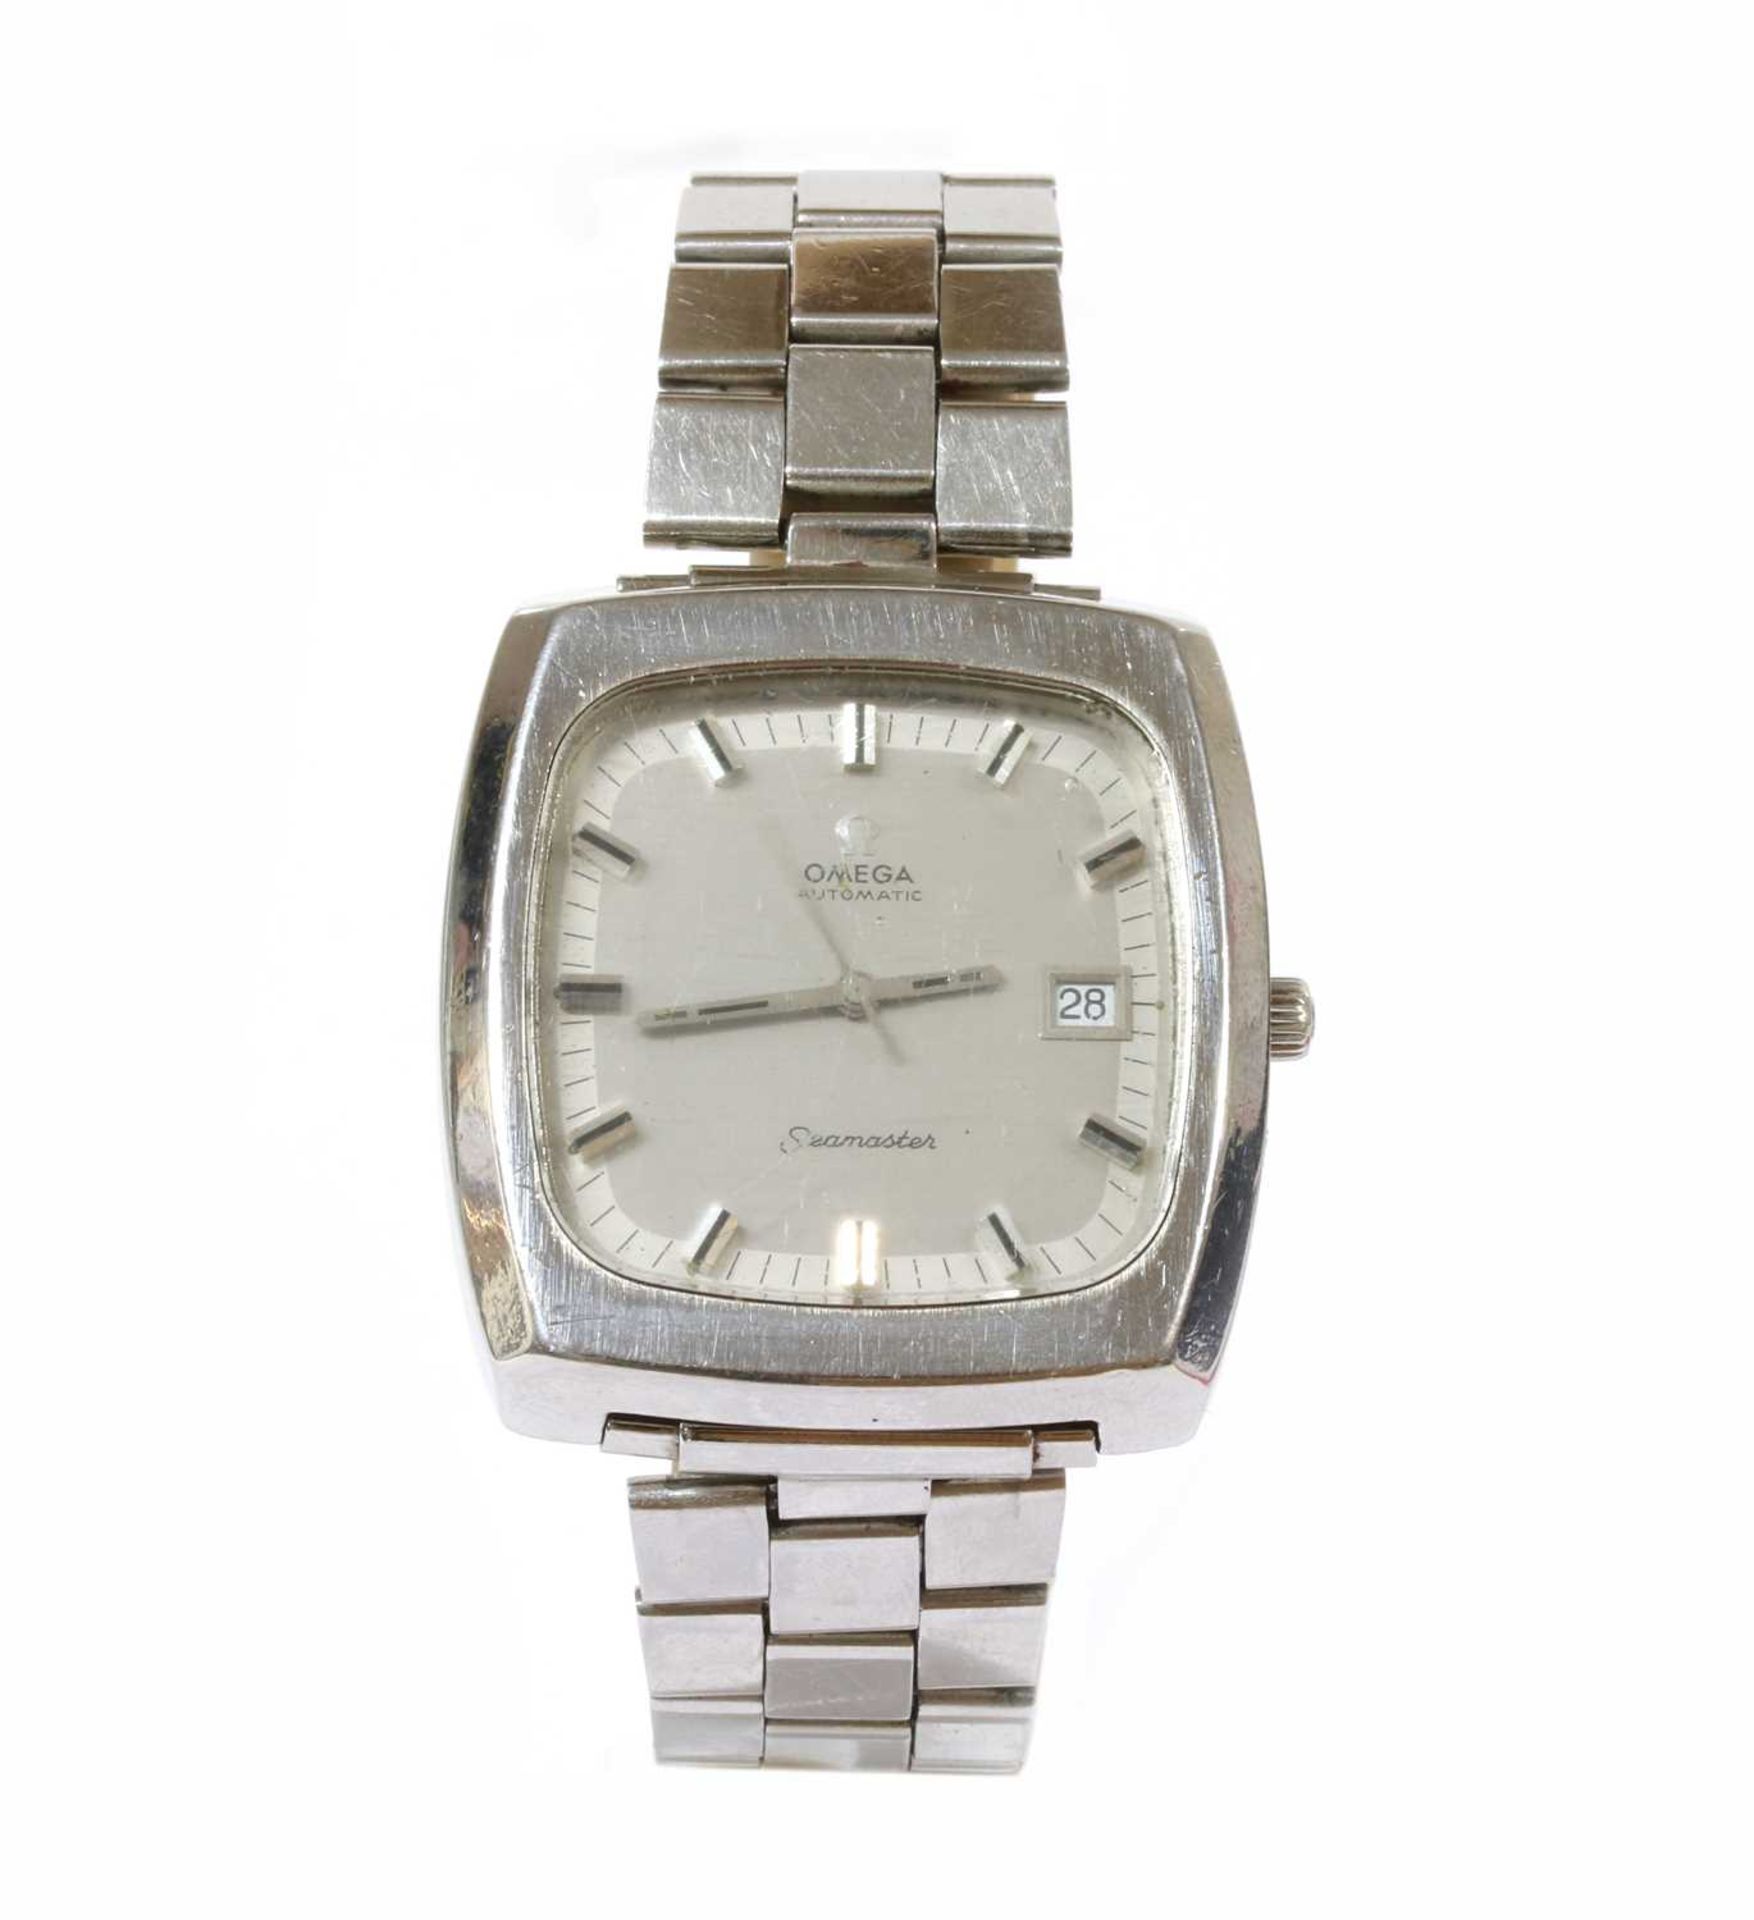 A gentlemen's stainless steel Omega 'Seamaster' automatic bracelet watch, c.1970,